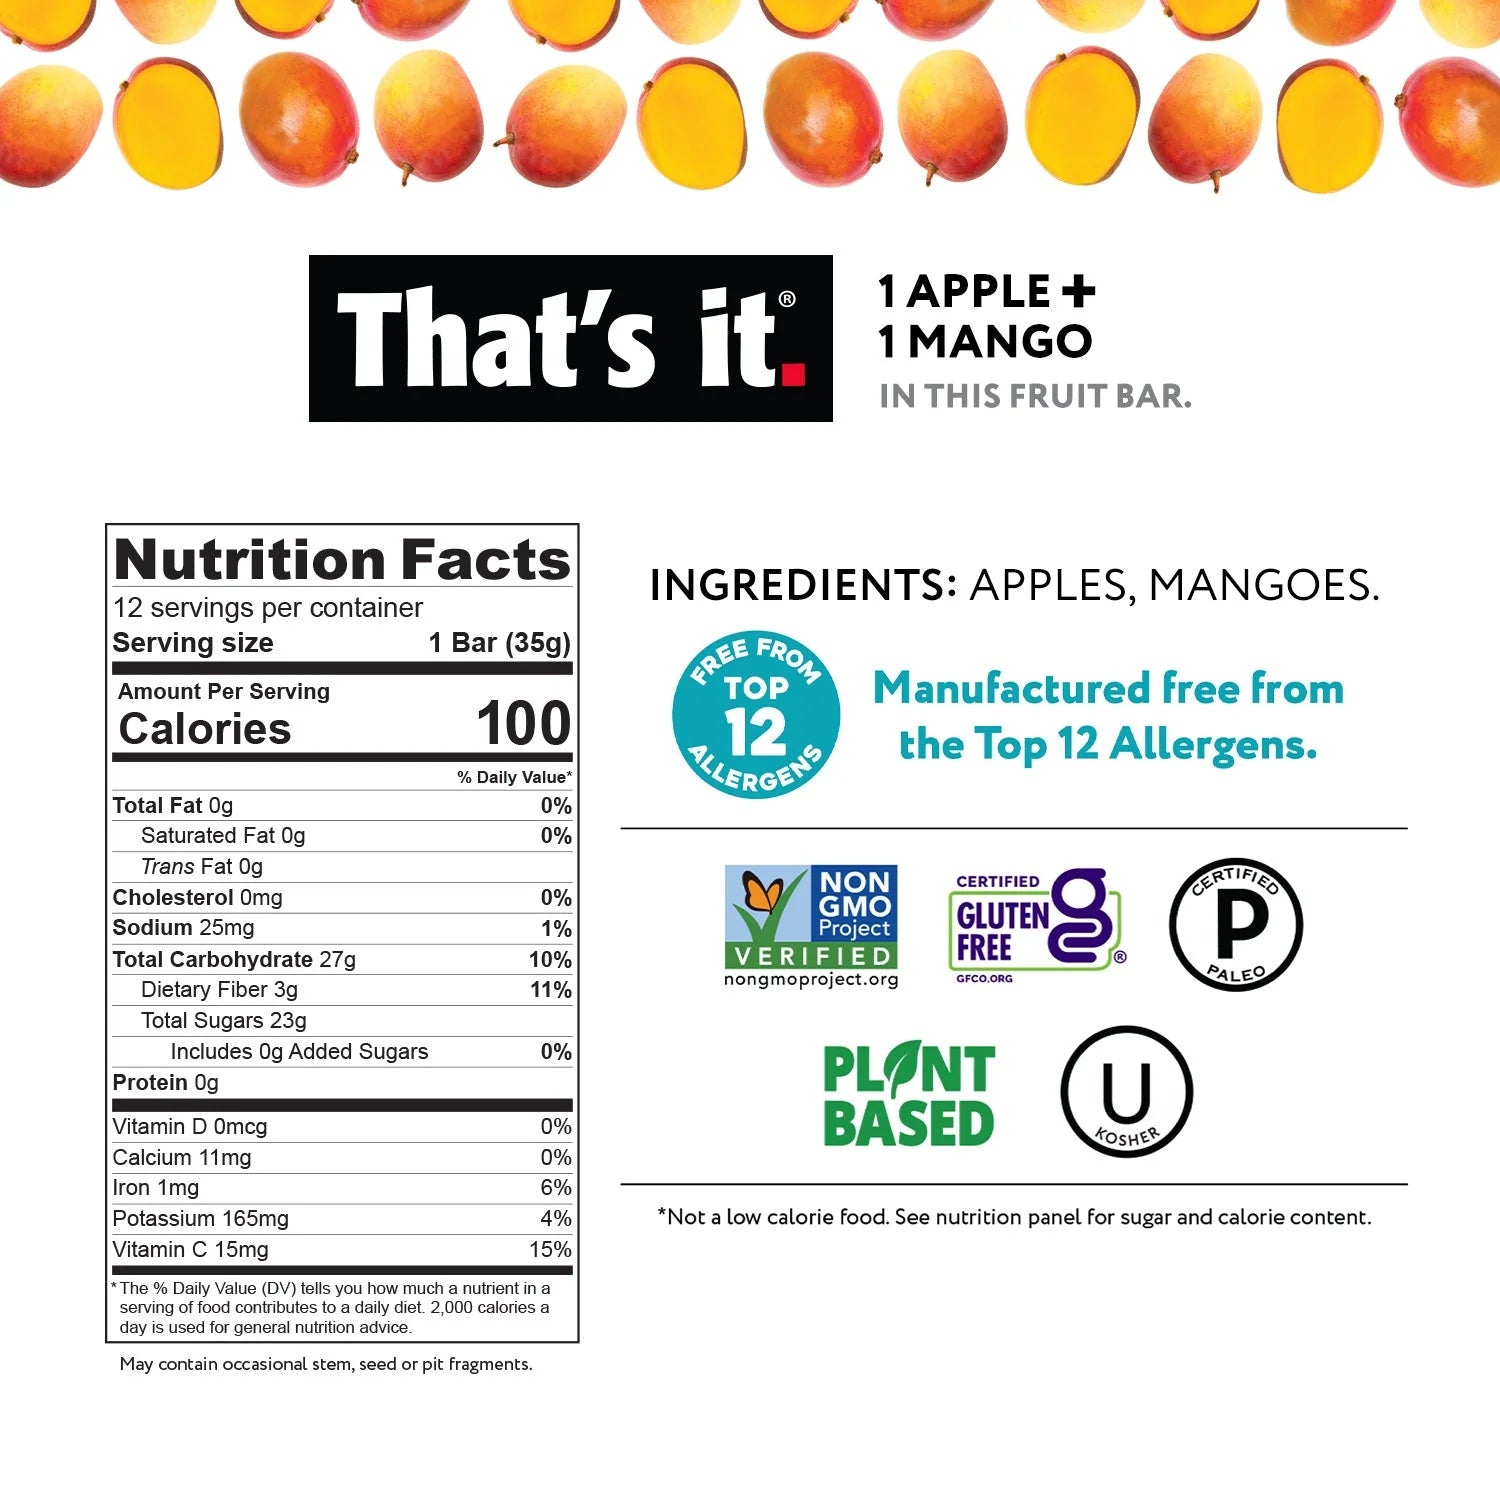 That's It - Apple + Mango Fruit Bar